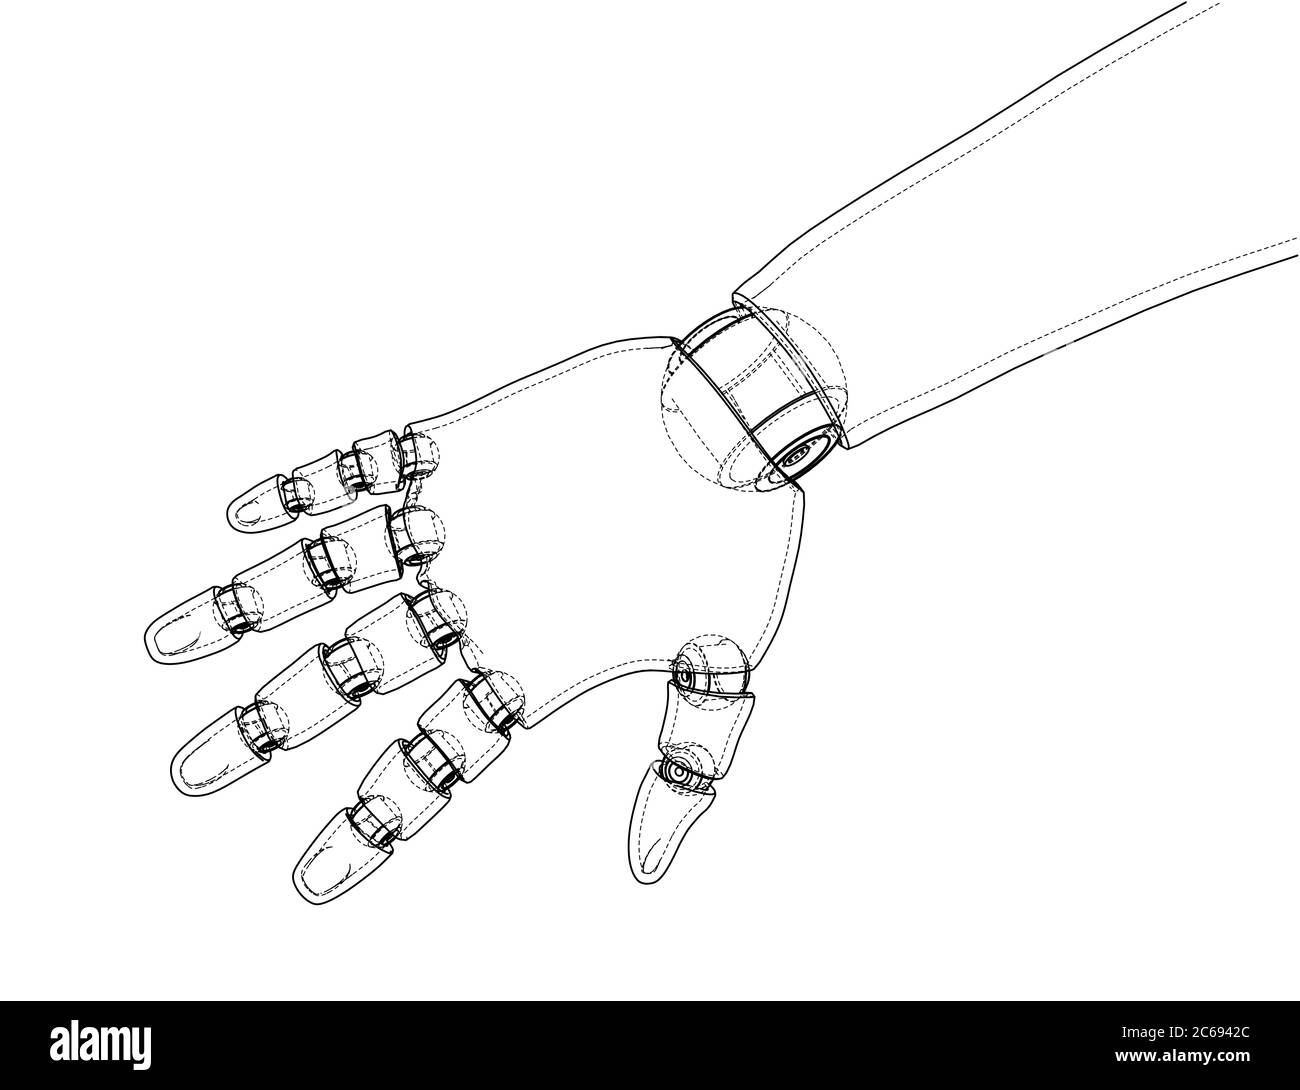 Robot hand outline. 3D illustration Stock Photo